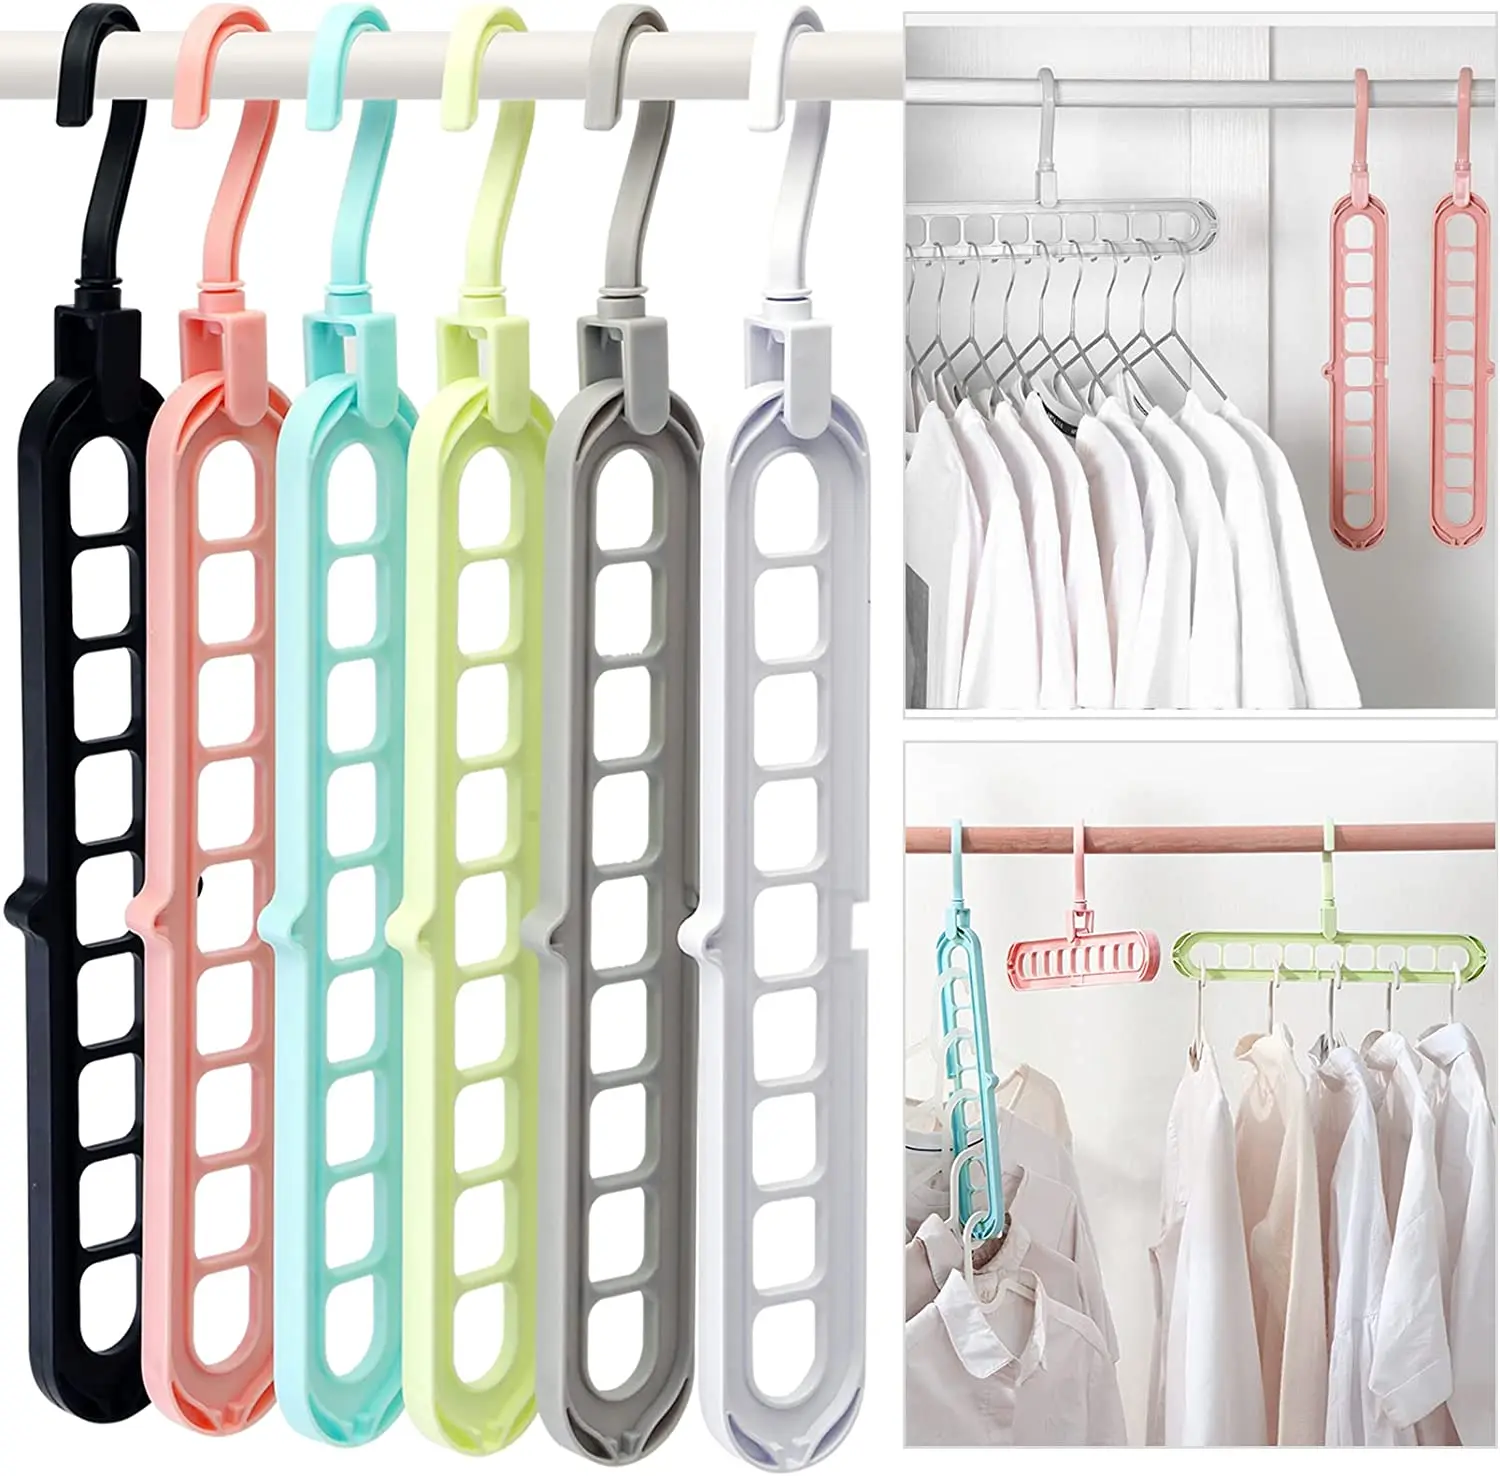 

Clothes Hanger Racks,College Dorm Room Essentials,Magic Space Saving Hangers Closet Storage Organization for Wardrobe Closet